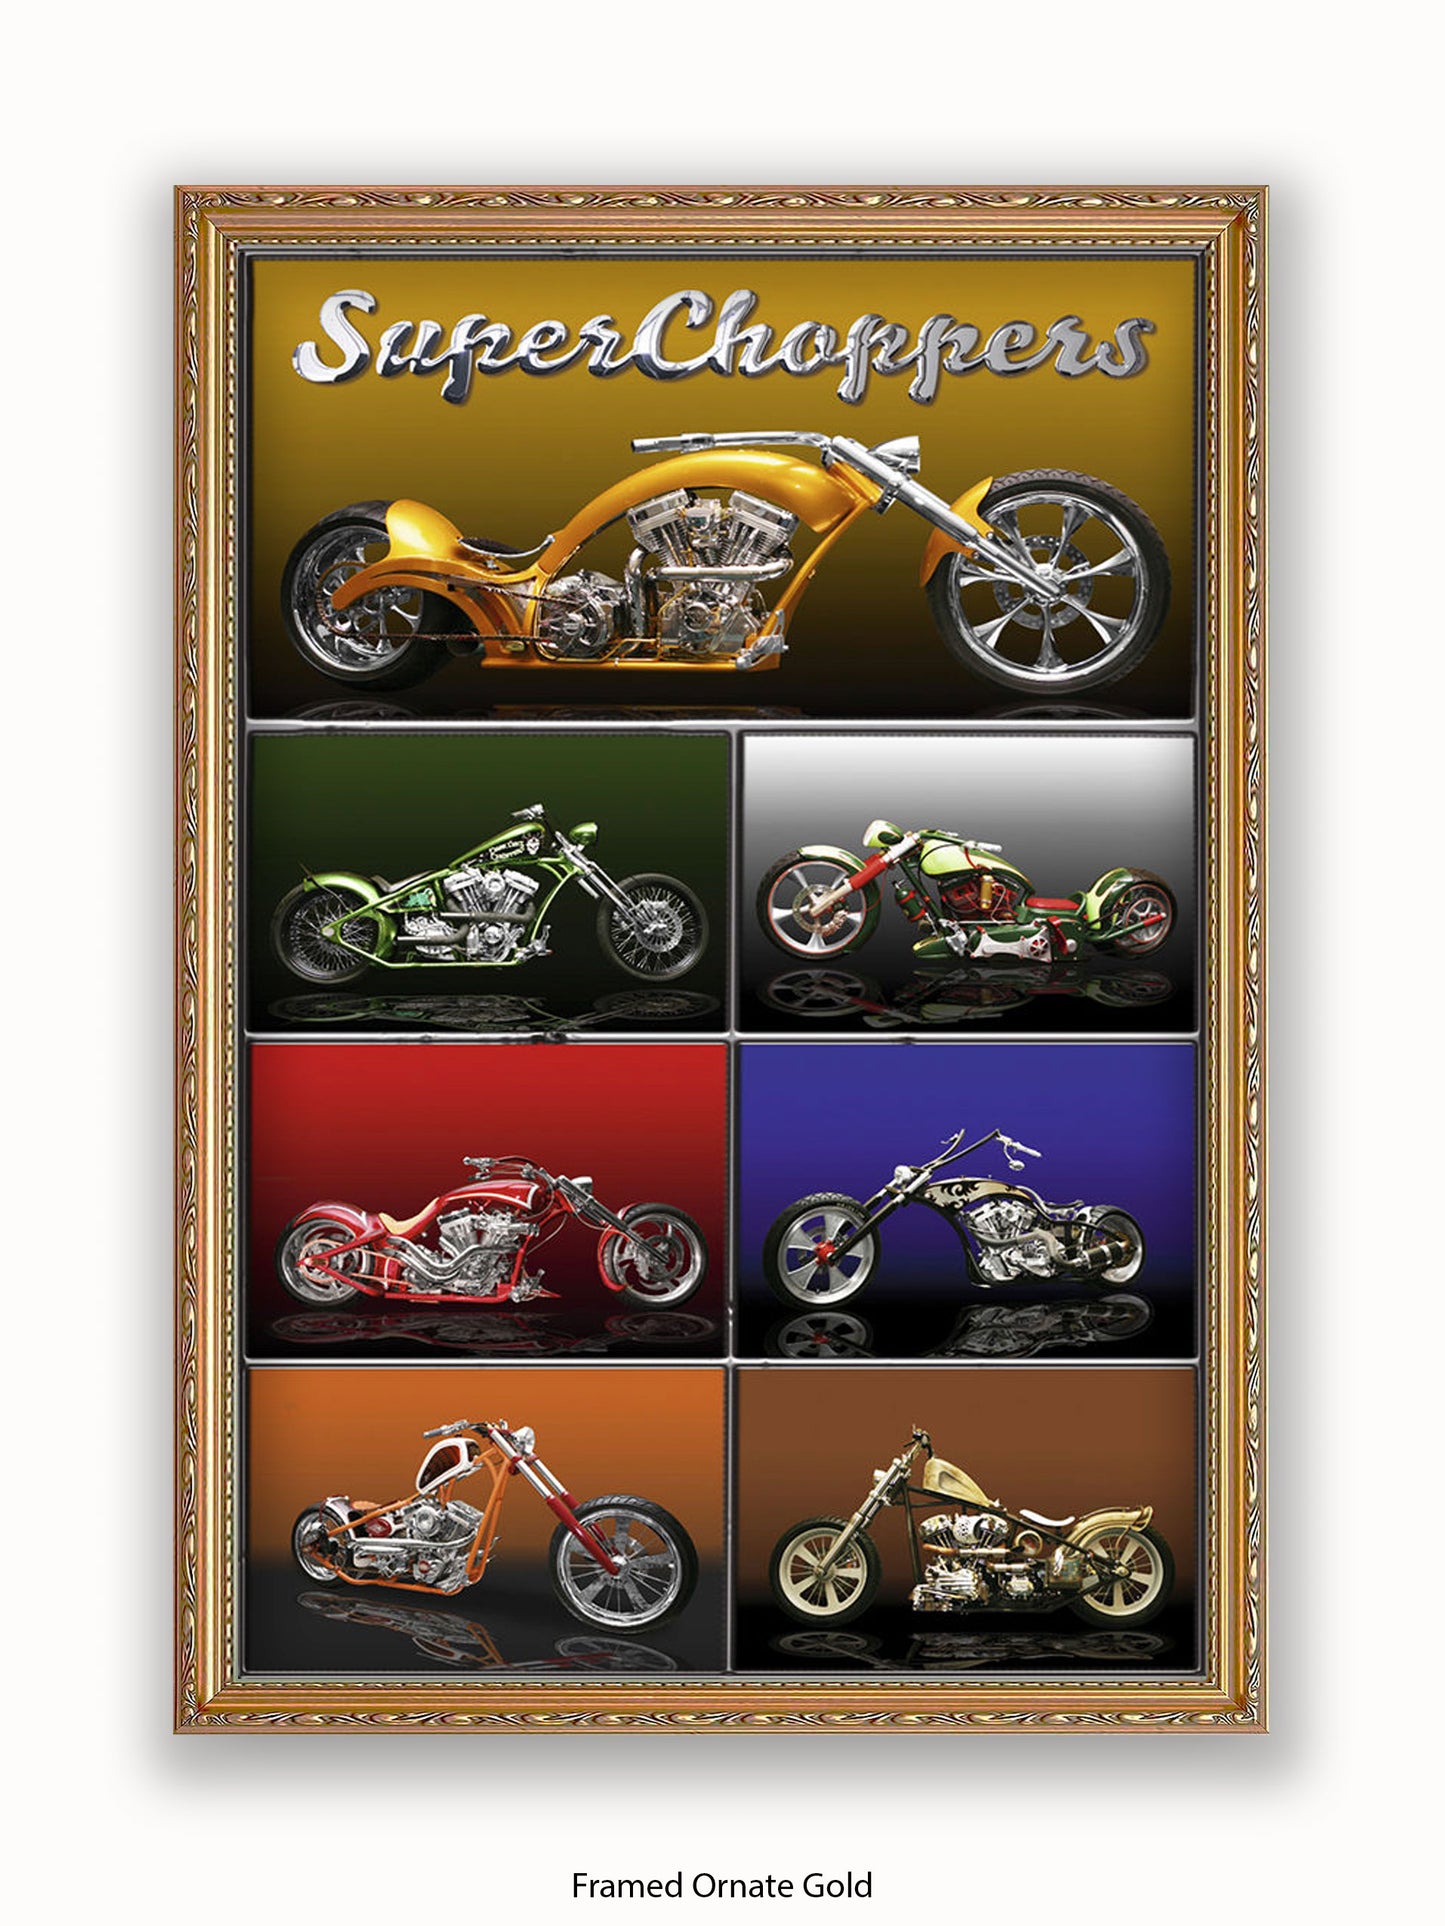 American Chopper Bike Poster